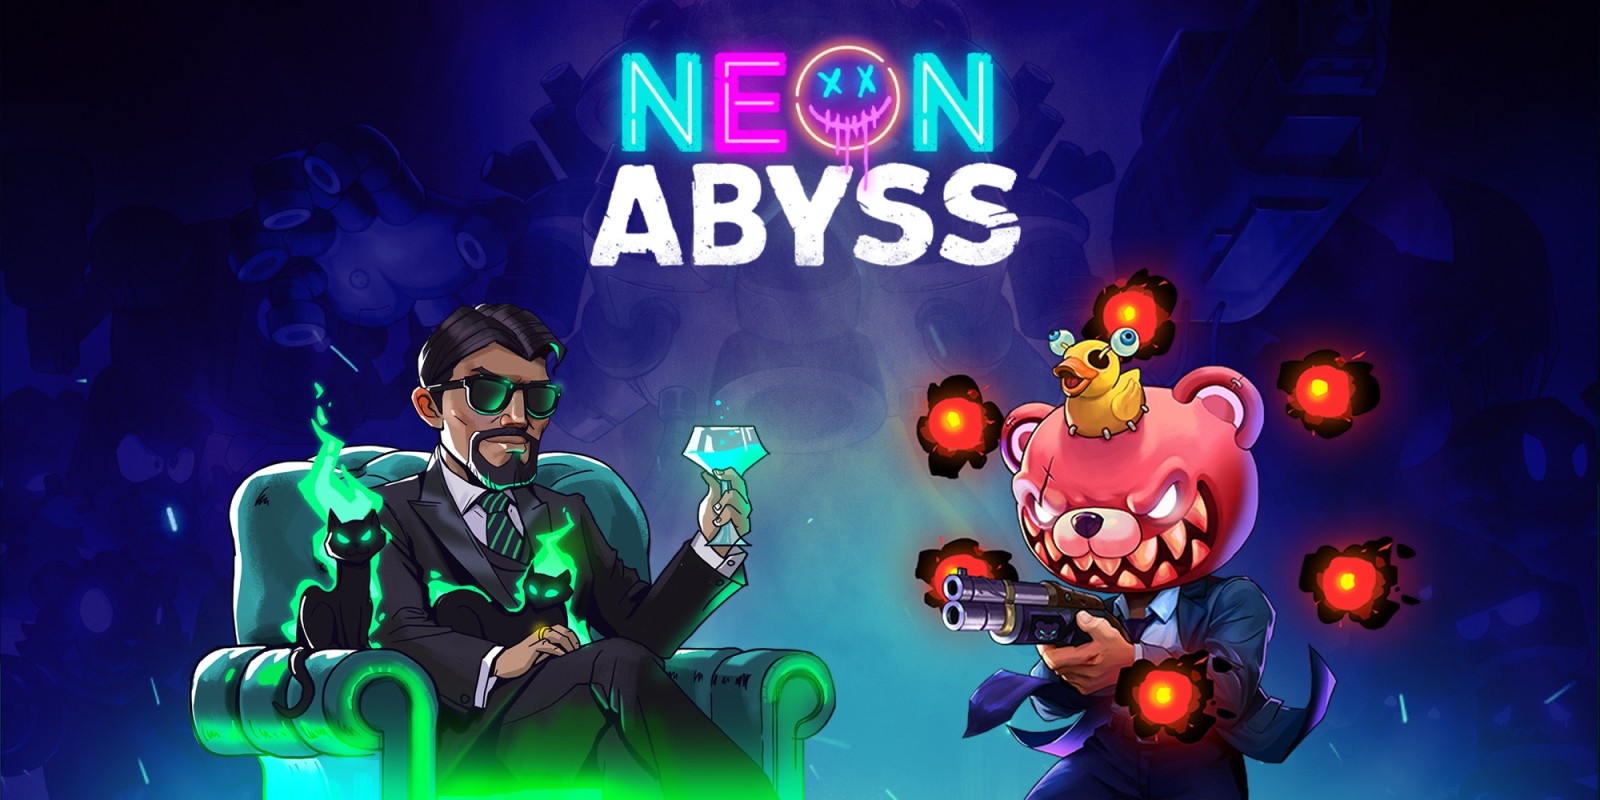 Acorn neon abyss